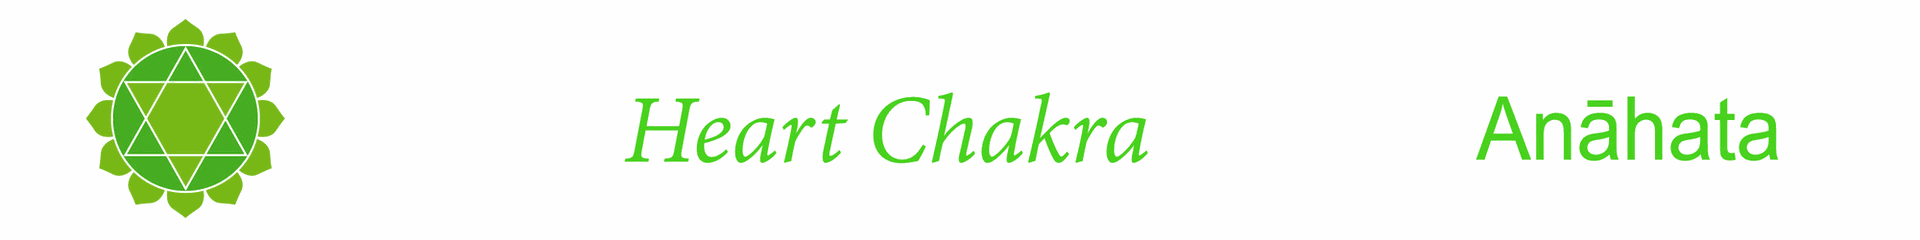 heart chakra image